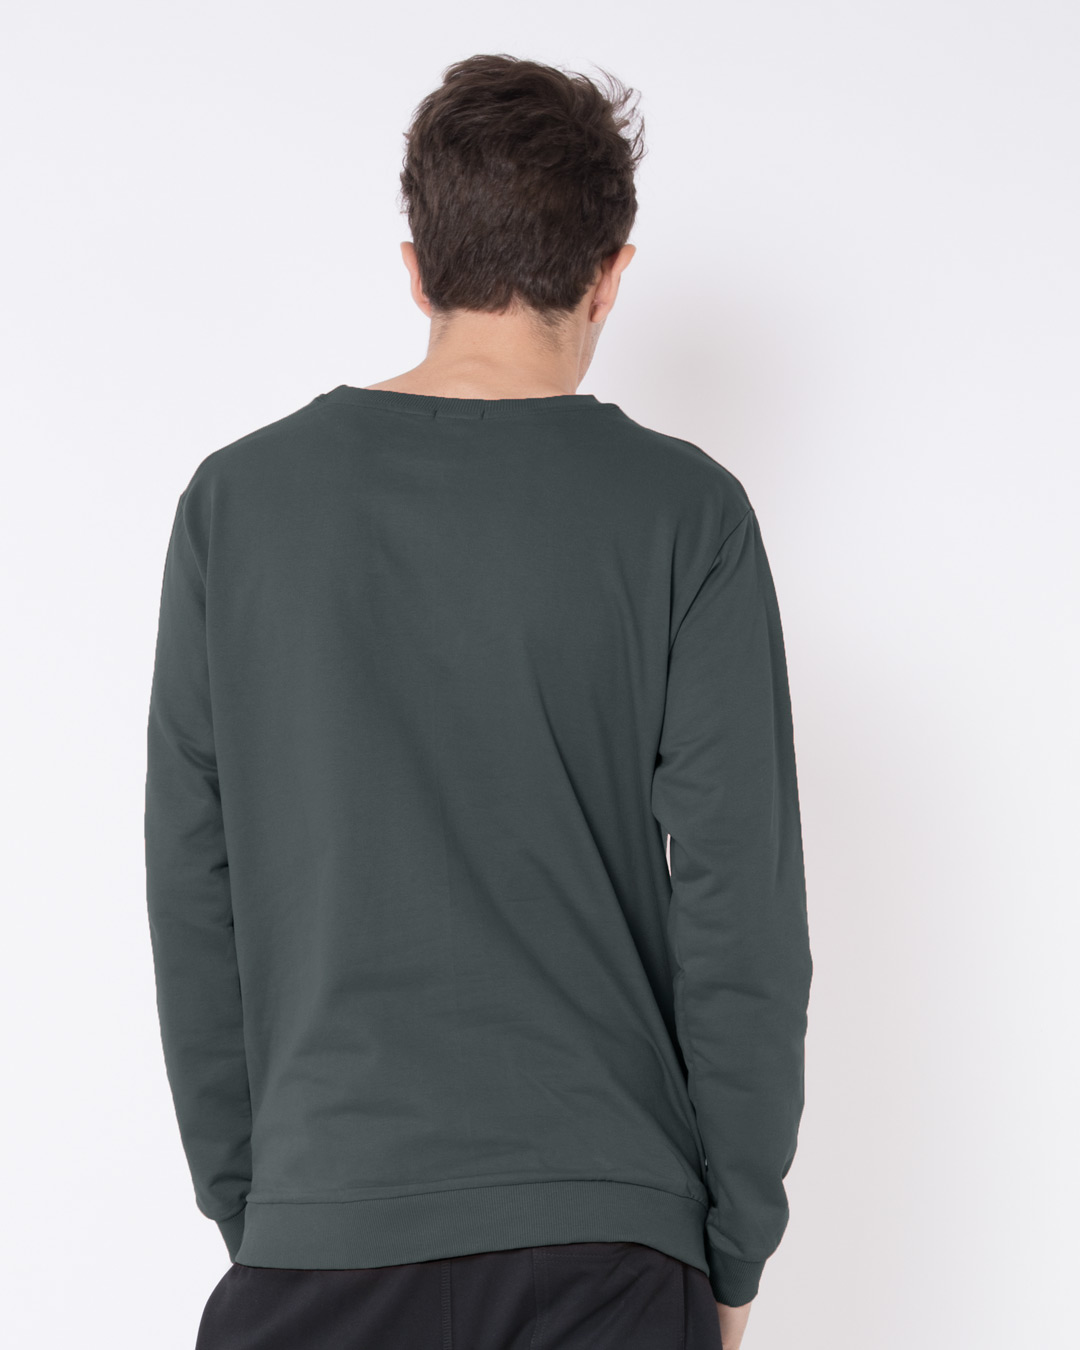 Shop Lazy Timezone Fleece Light Sweatshirts (LTL)-Back